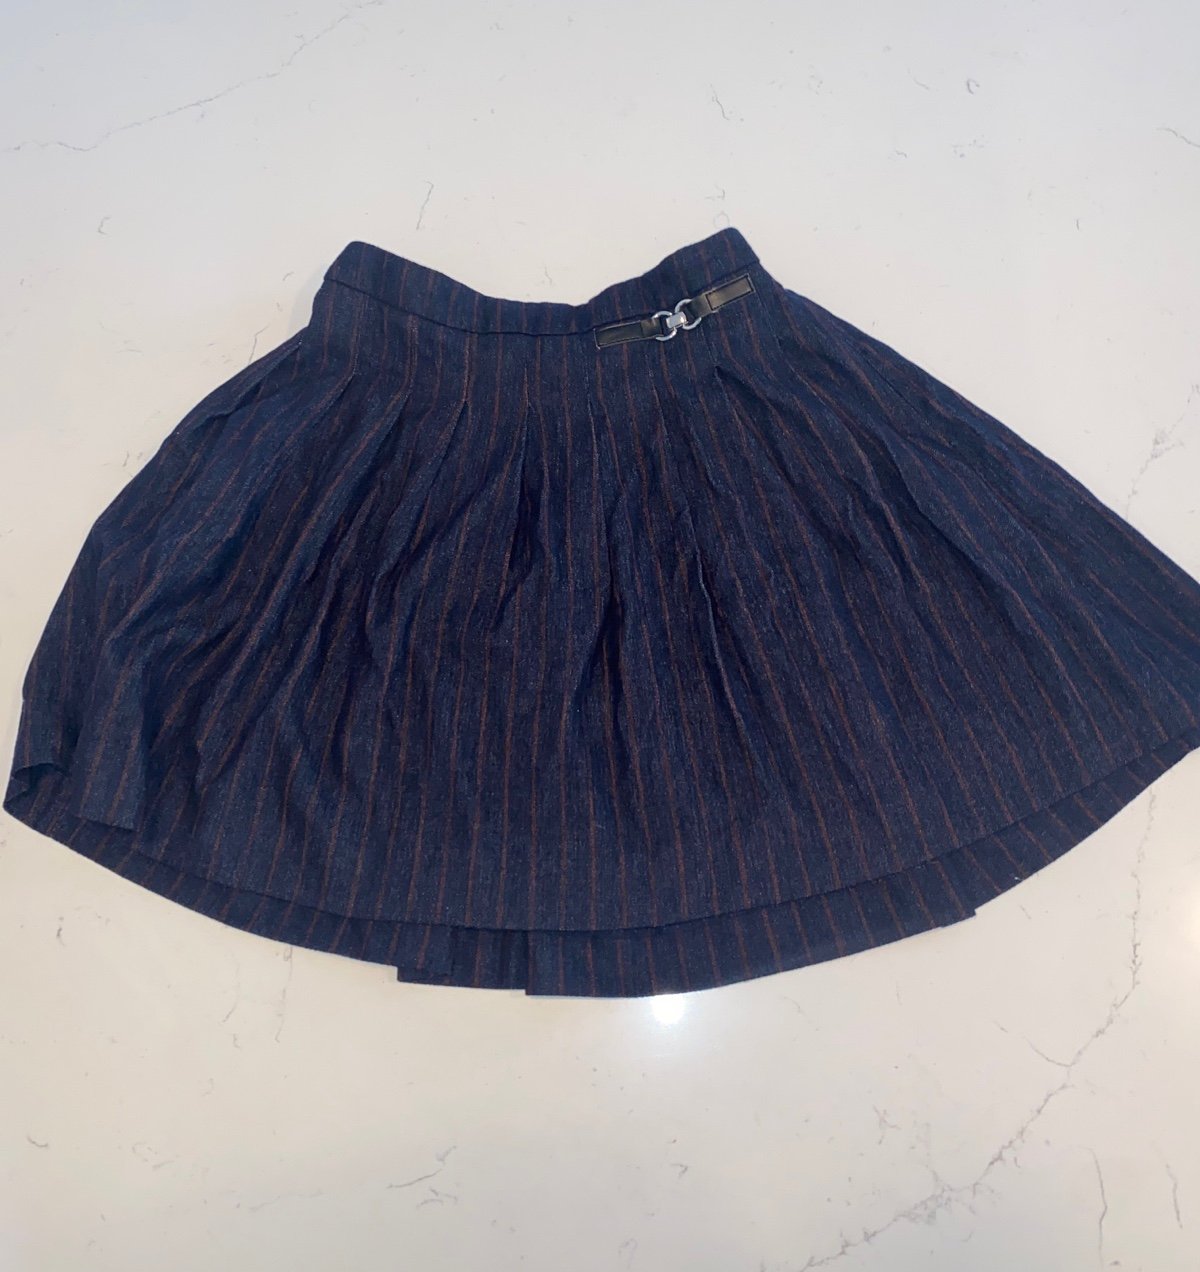 the Lowest price Zara Girls Ruffled Skirt hrPPm4kHW Fac